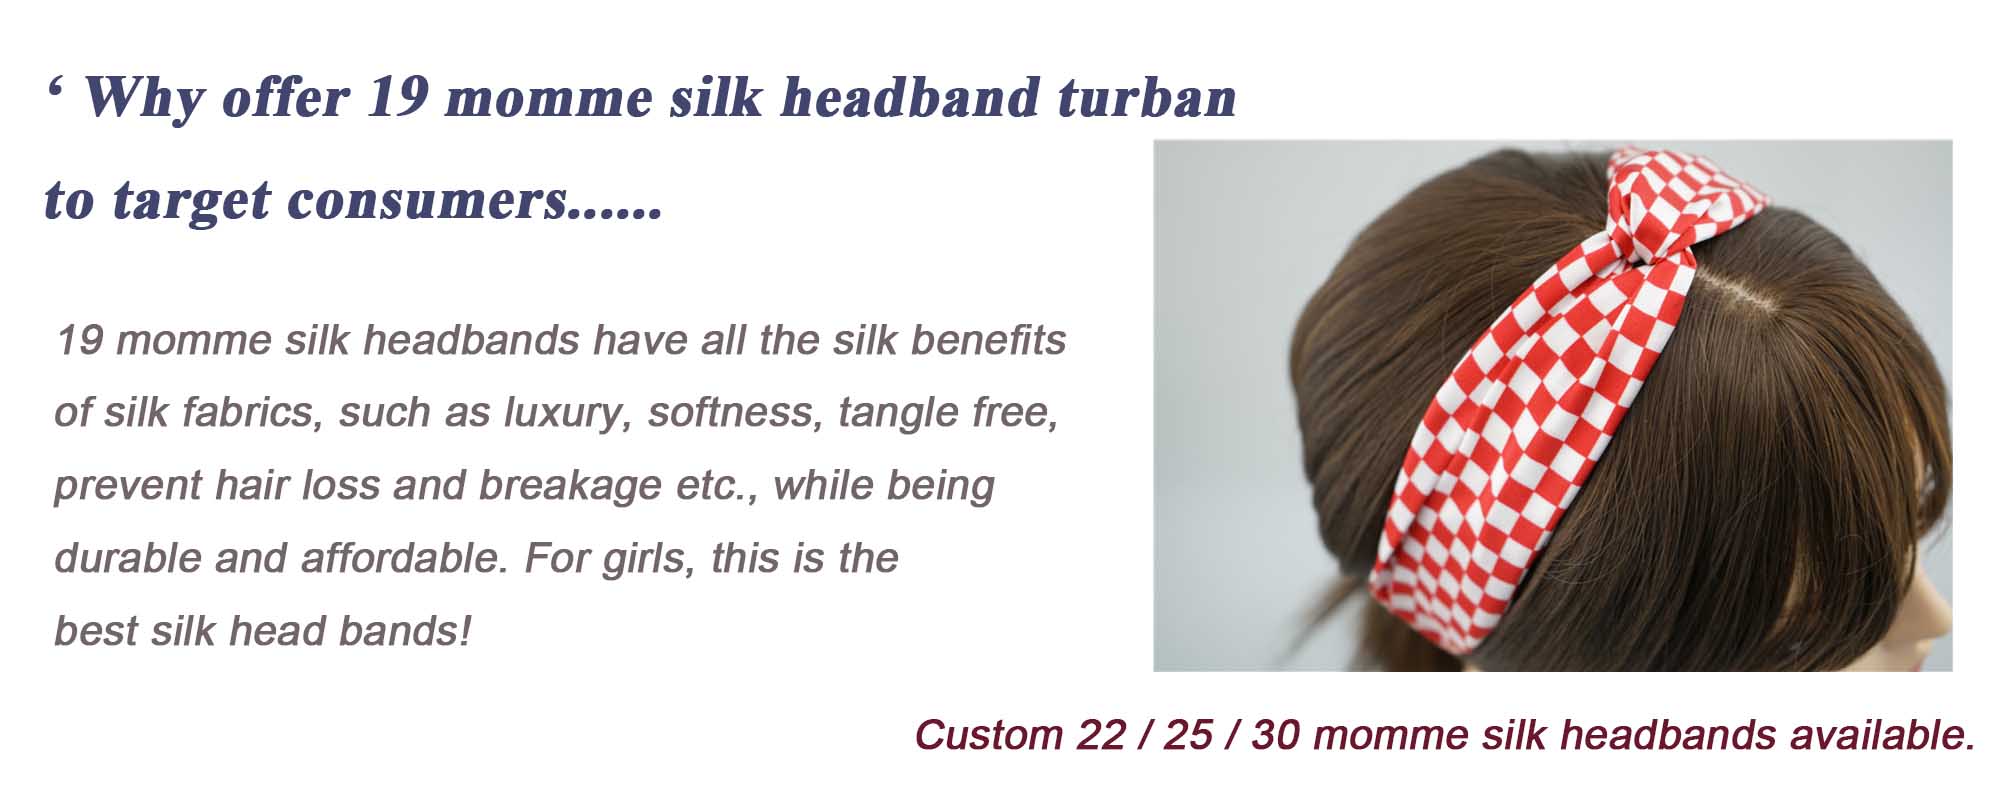 mulberry silk headband